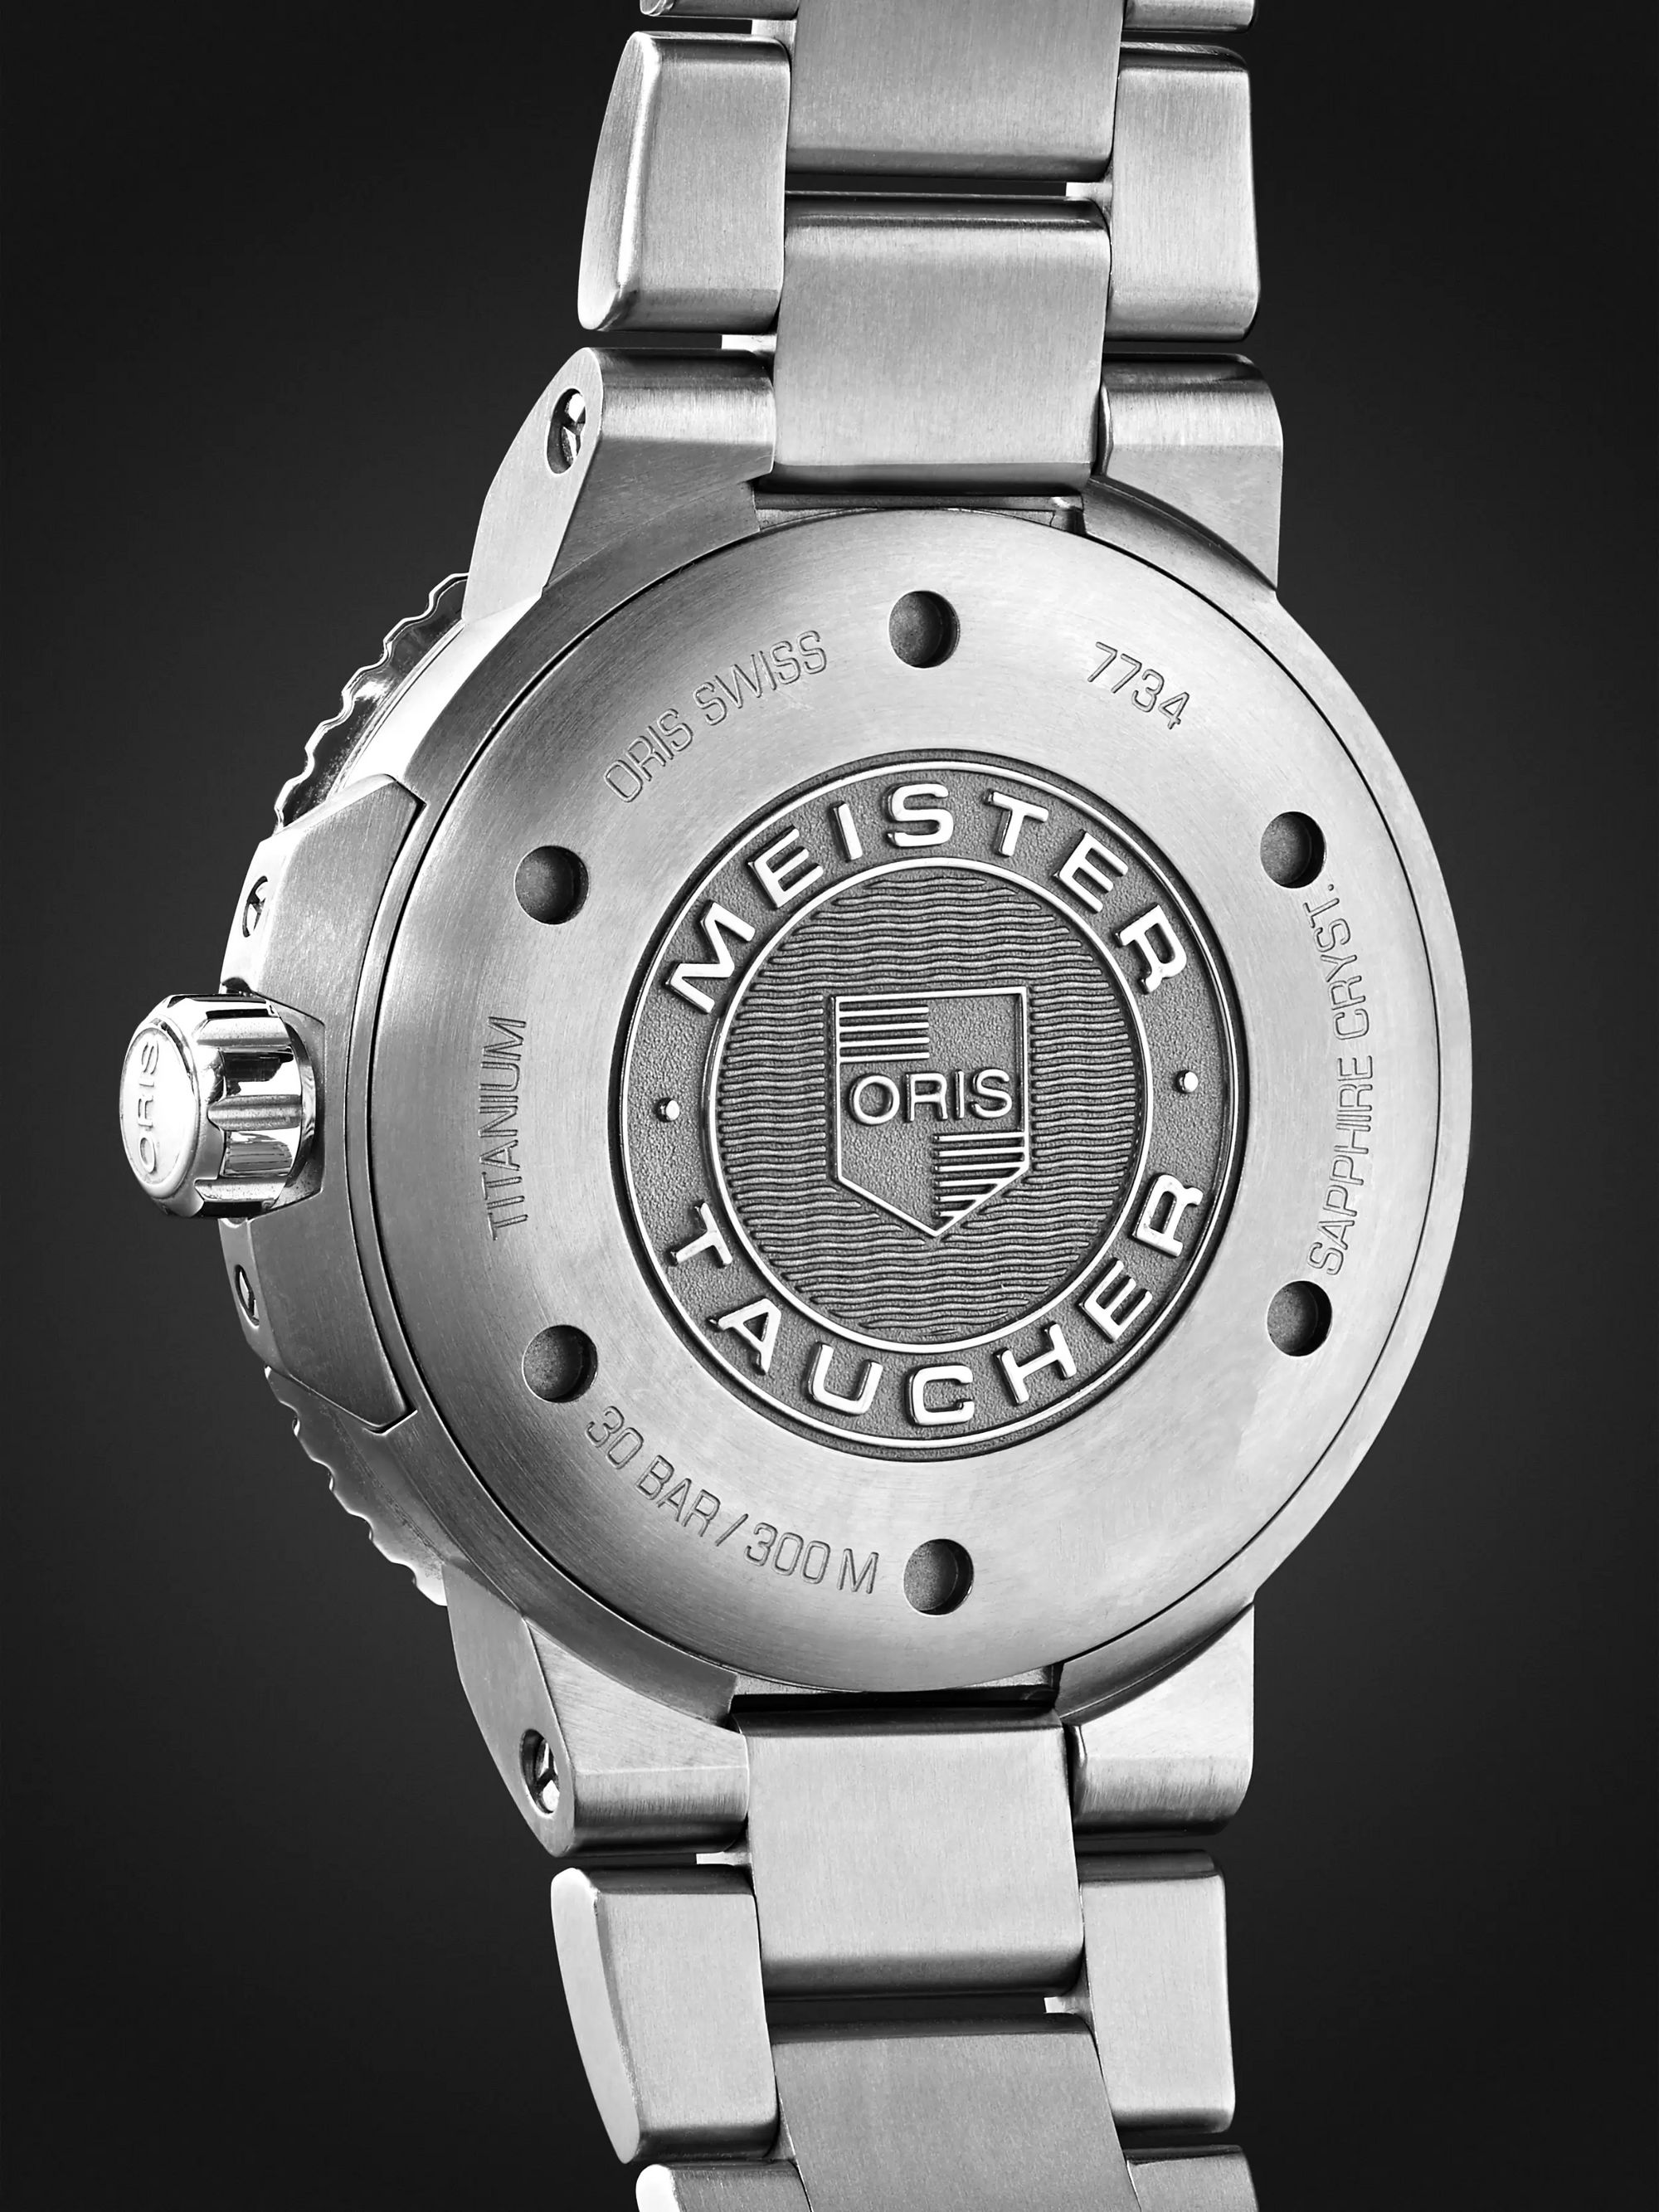 Aquis Regulateur Der Meistertaucher Automatic 43.5mm Titanium Watch, Ref.  No. 01 749 7734 7154-Set